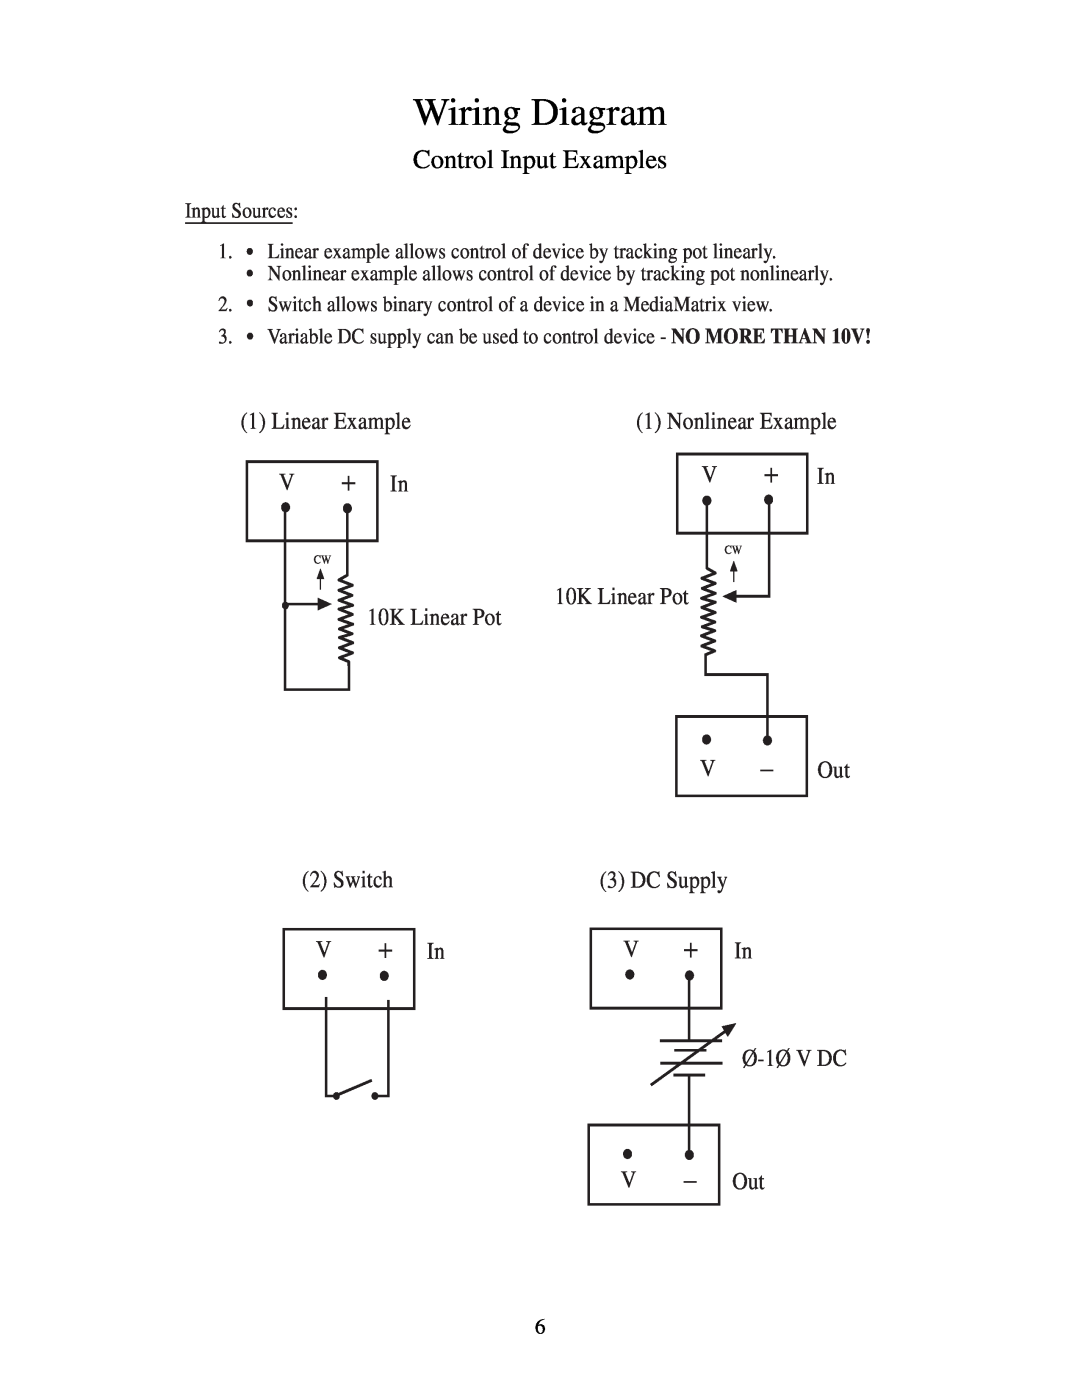 Peavey 646-049 manual Wiring Diagram, Control Input Examples 